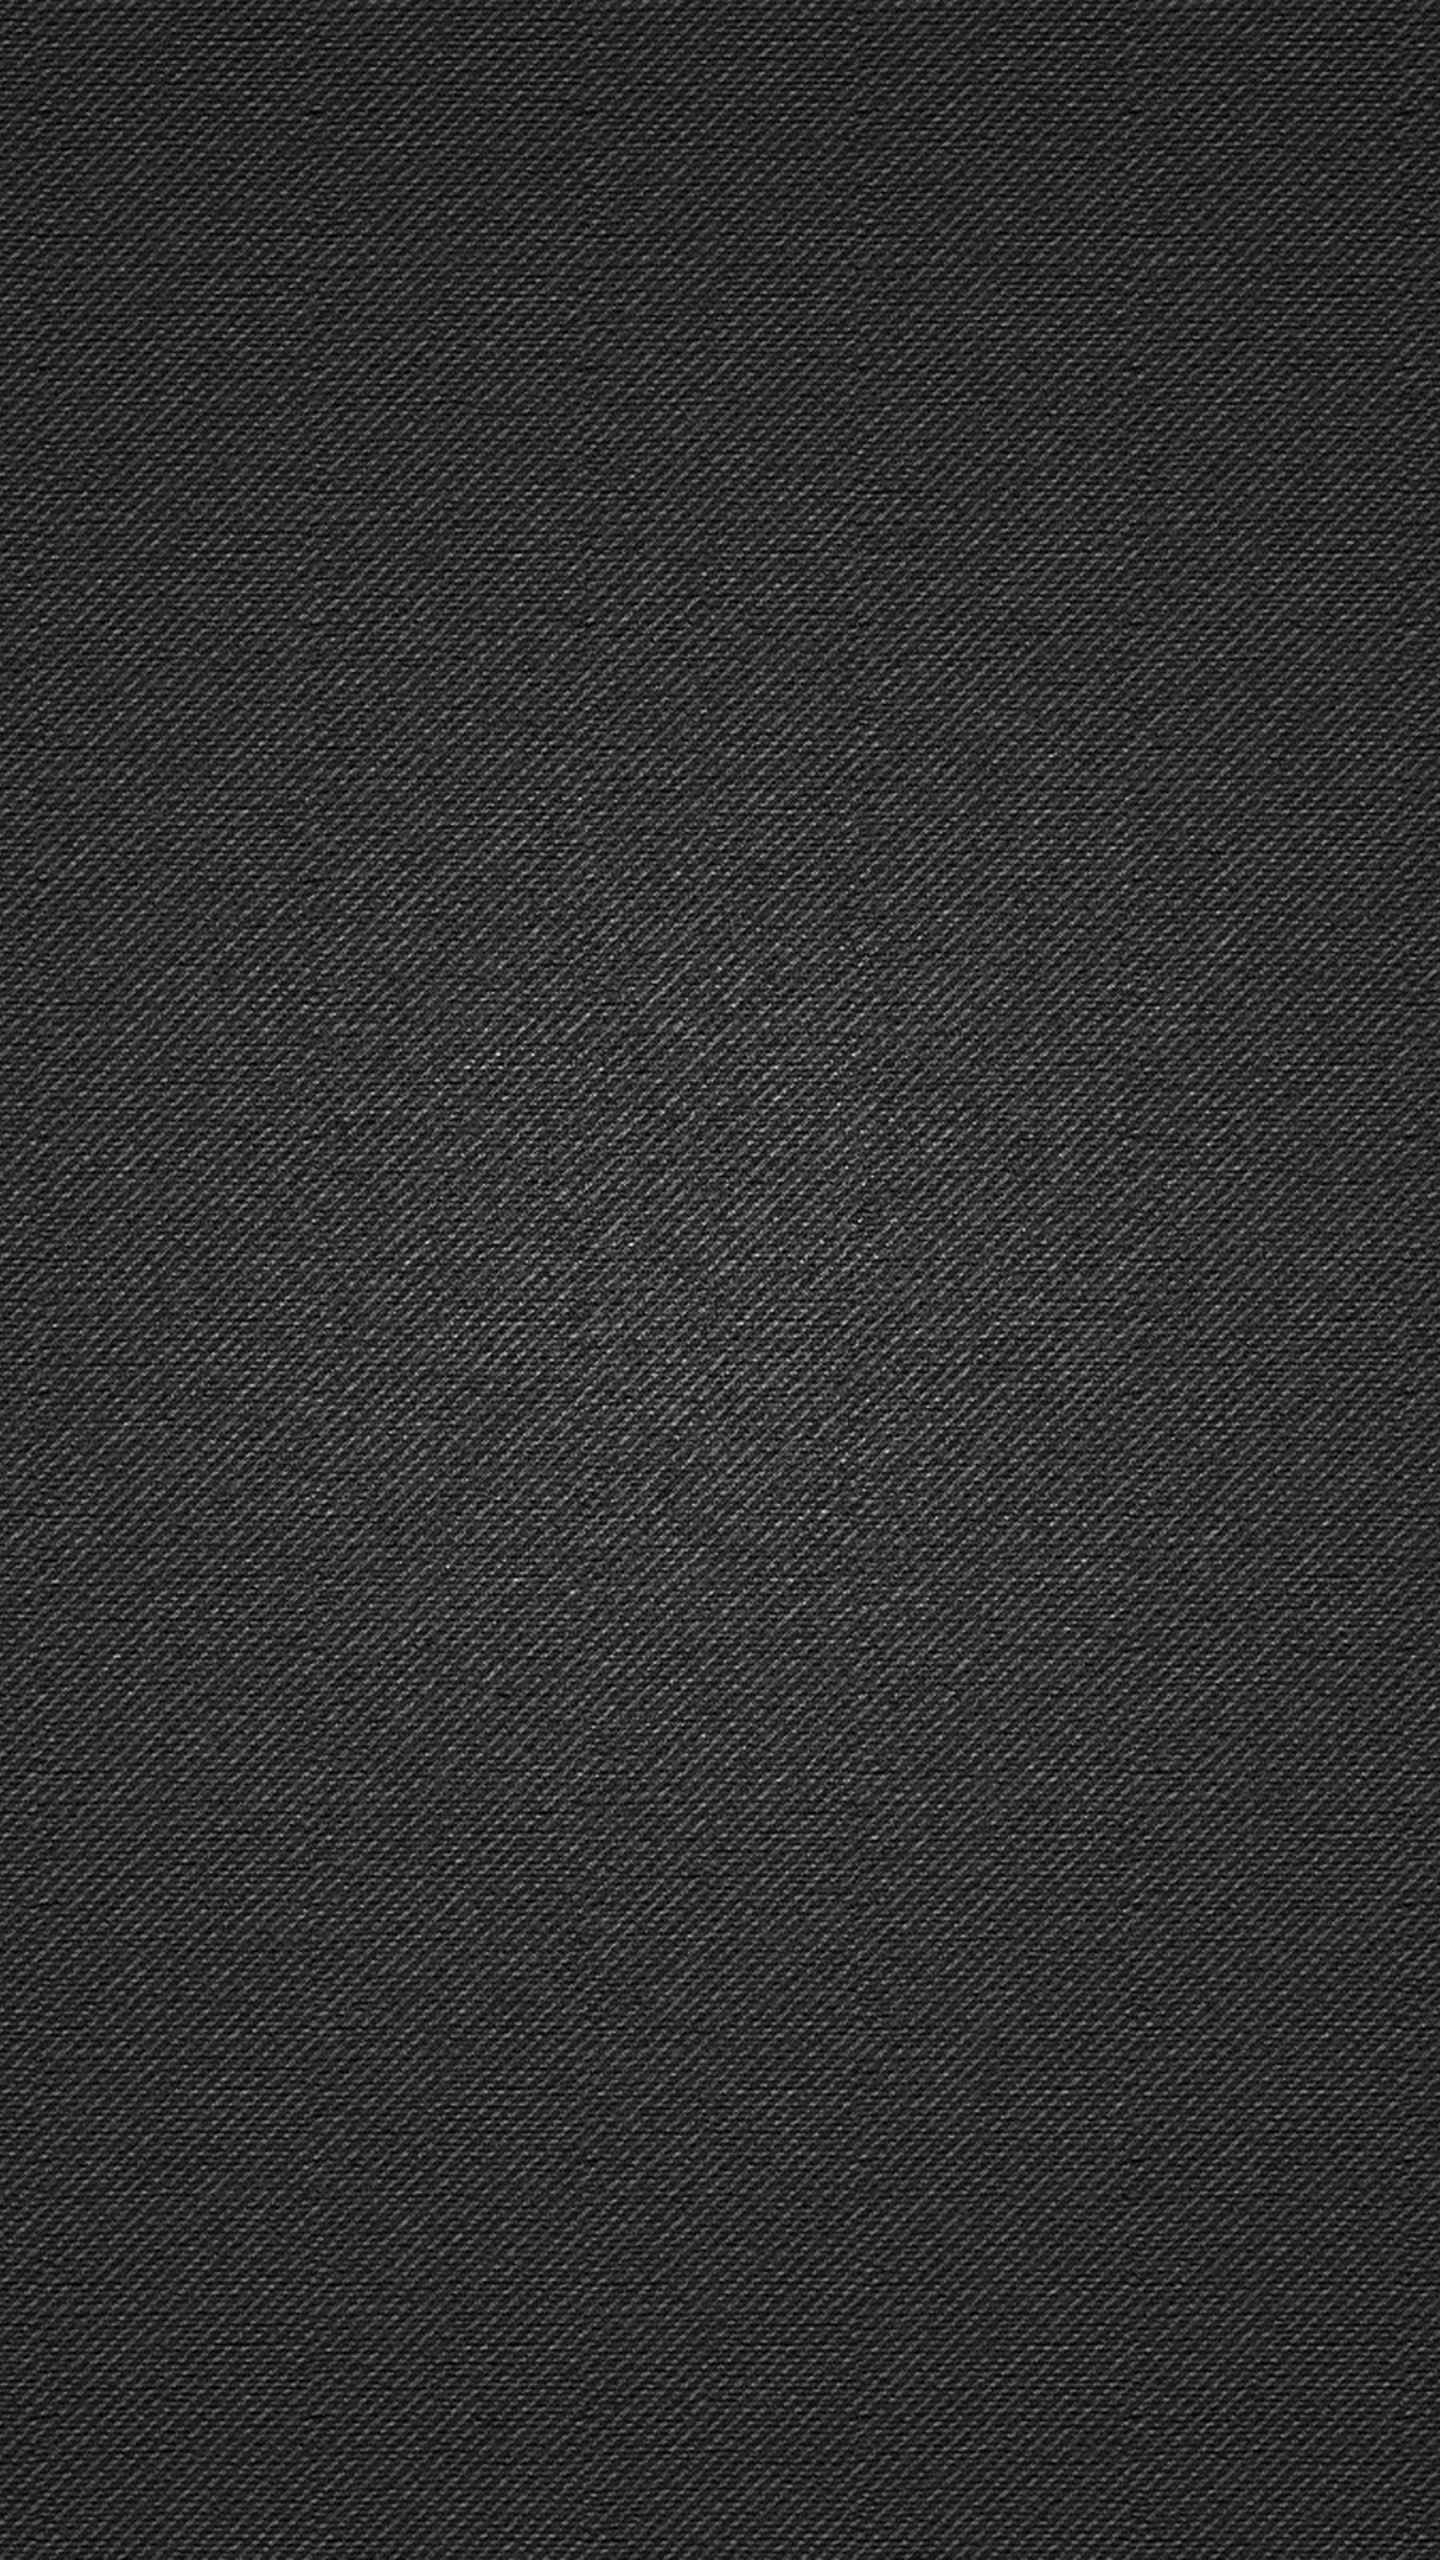 Metal Black Iphone 6 Wallpapers Hd - Seamless Dark Black Felt Texture - HD Wallpaper 